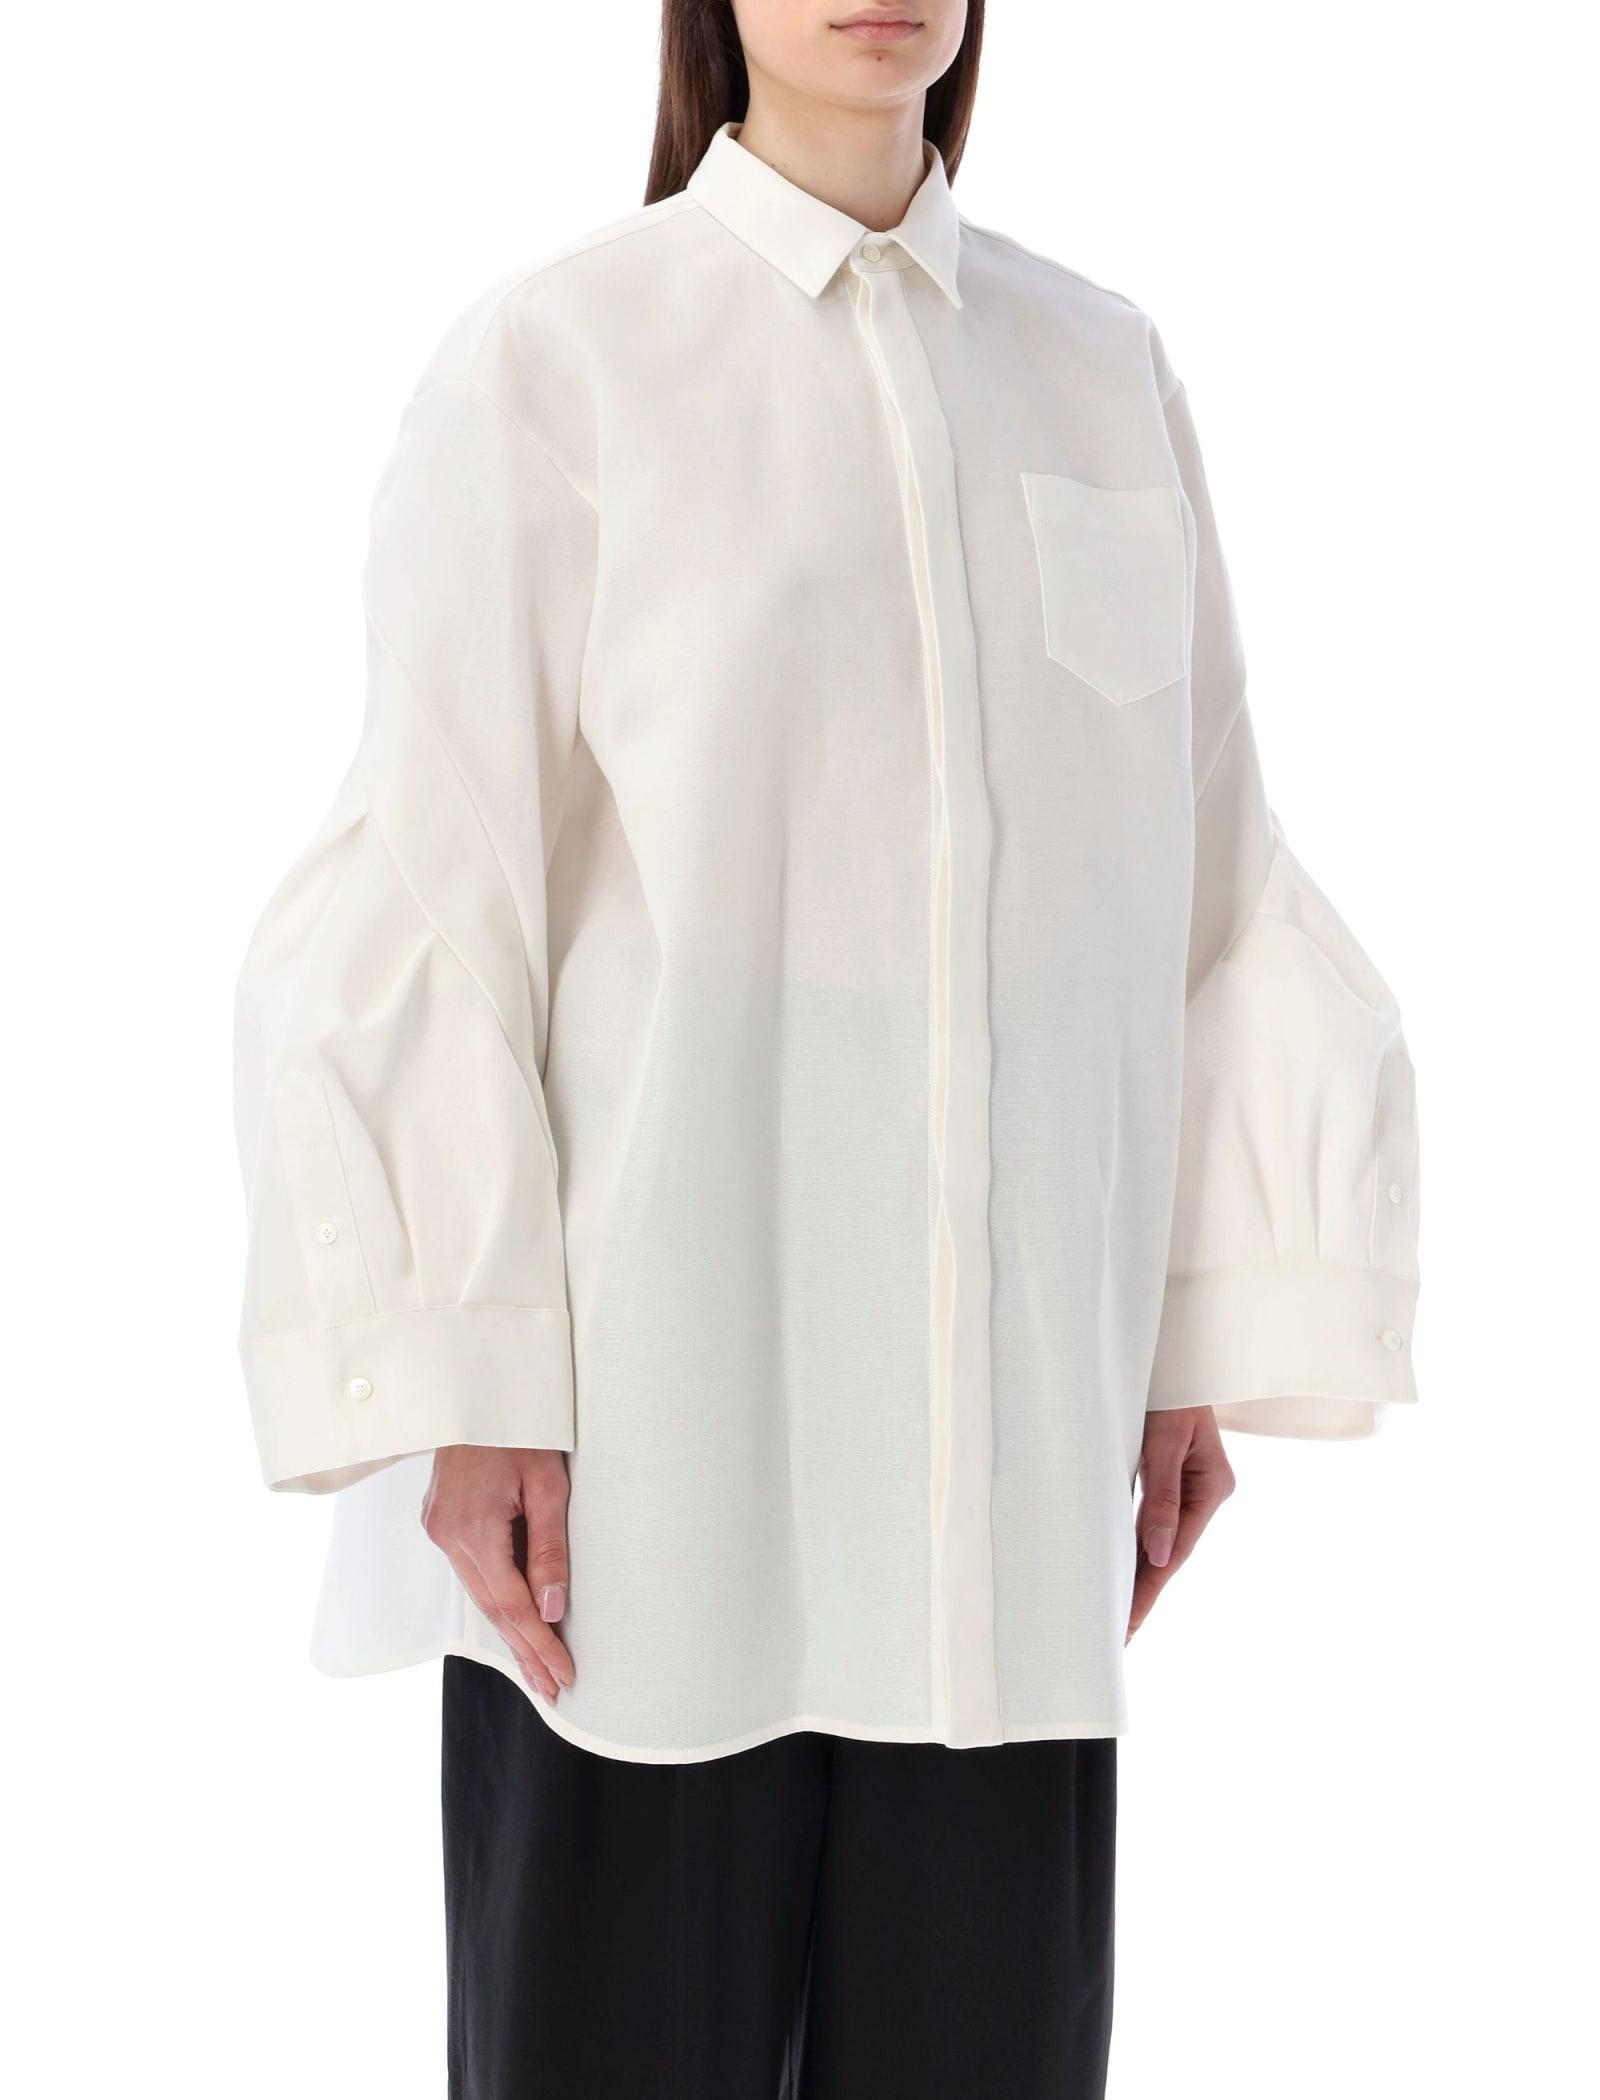 Sacai Acai Balloon Sleeves Oversize Shirt in White   Lyst